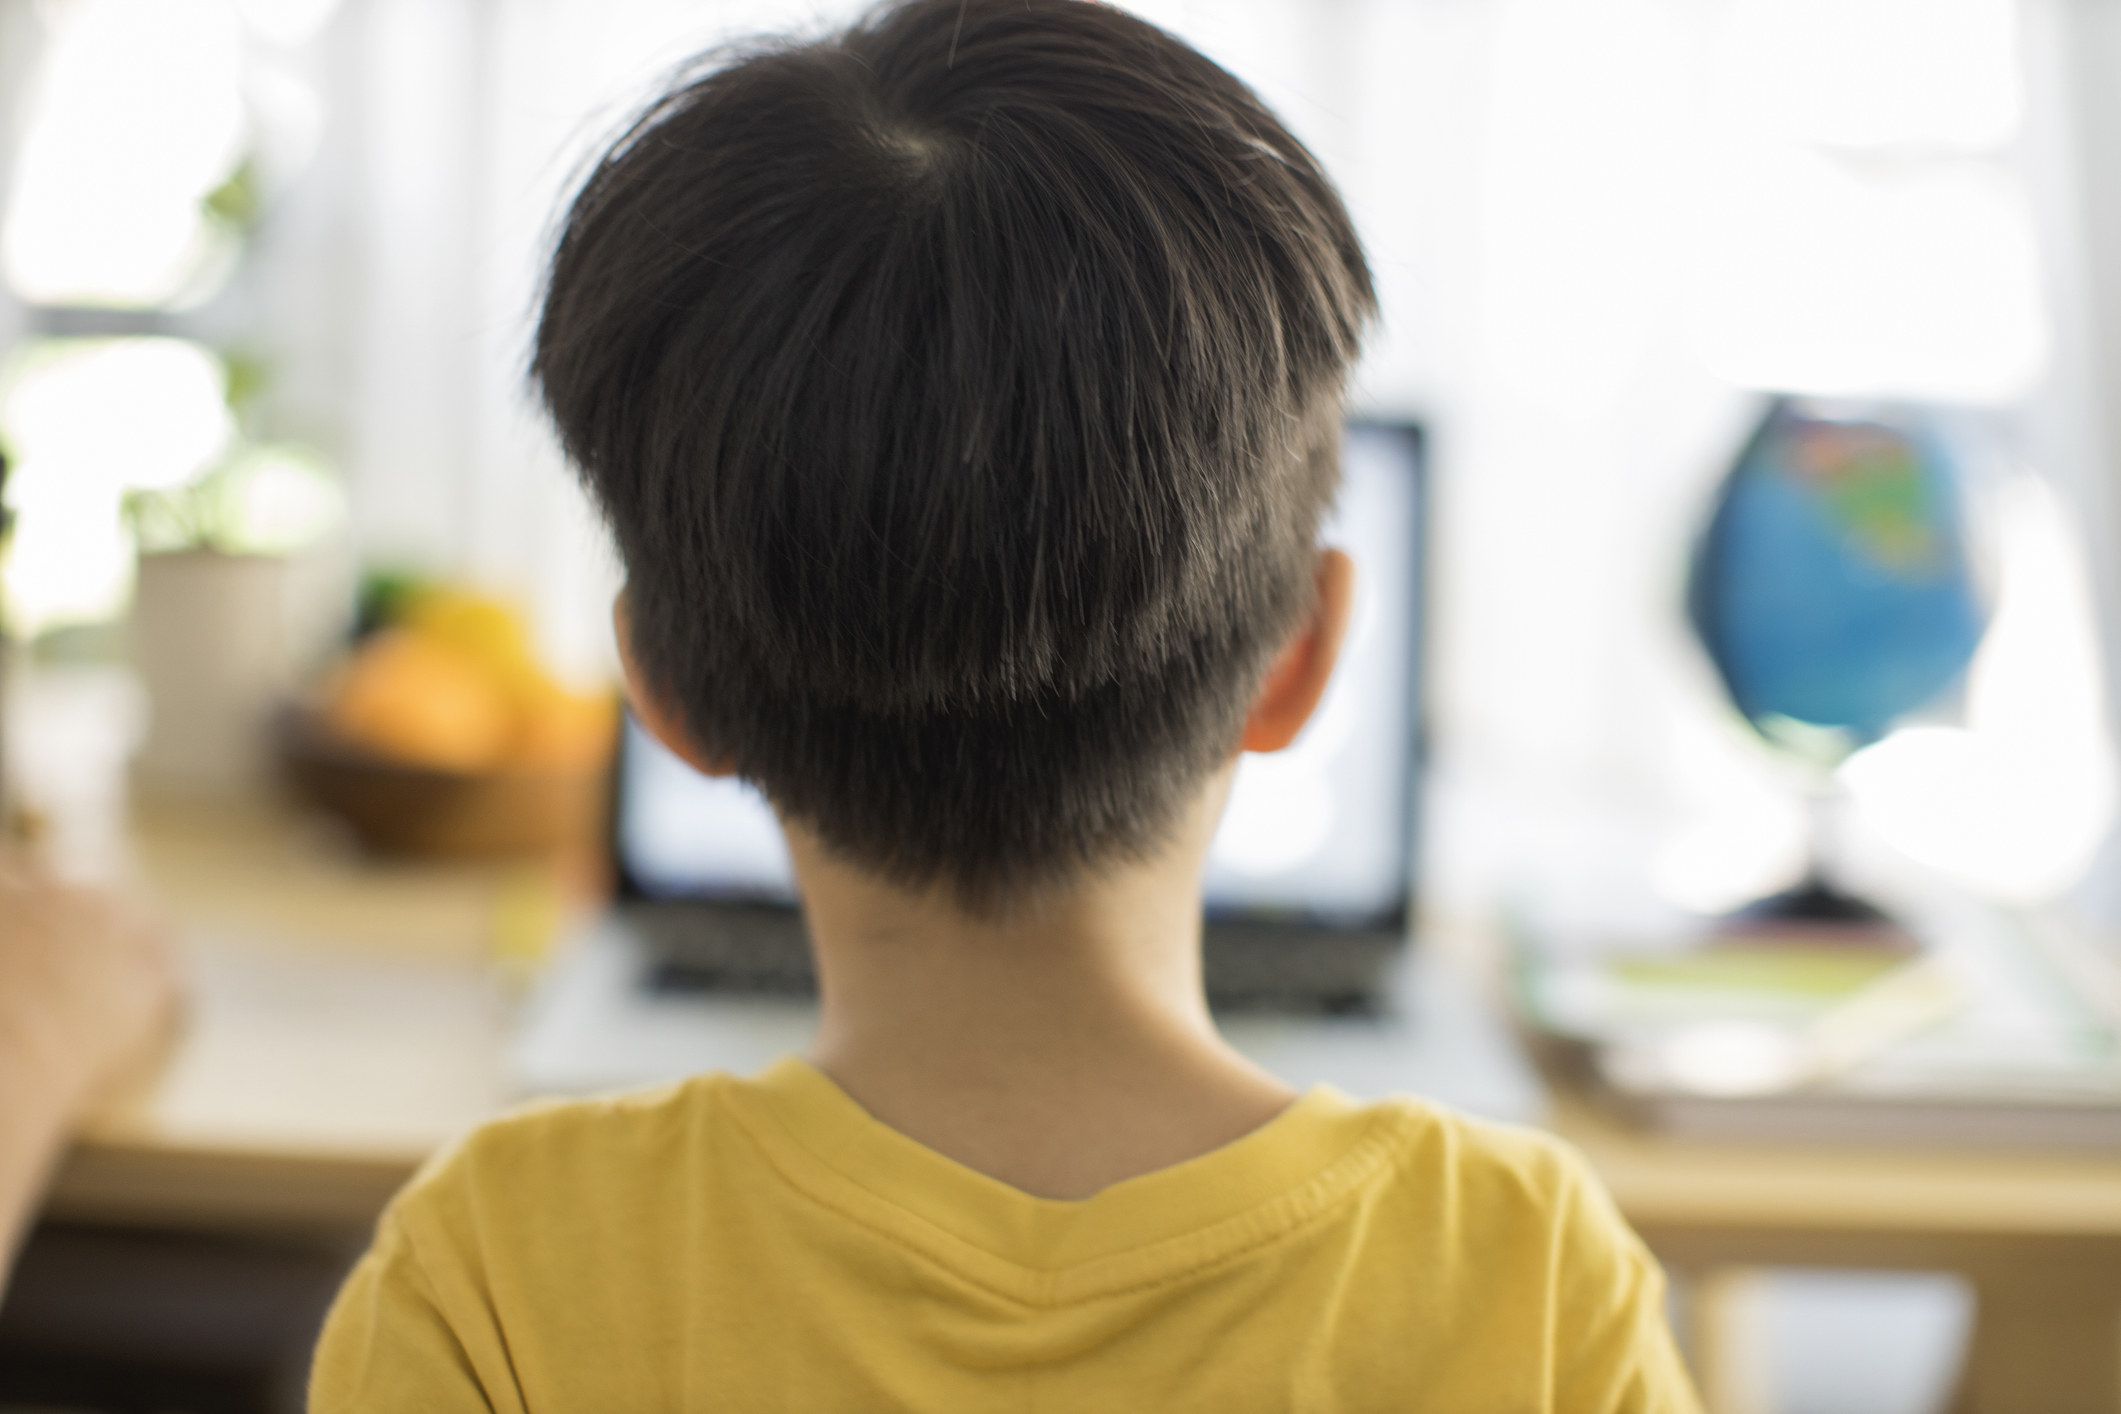 A little boy looking at a computer screen.